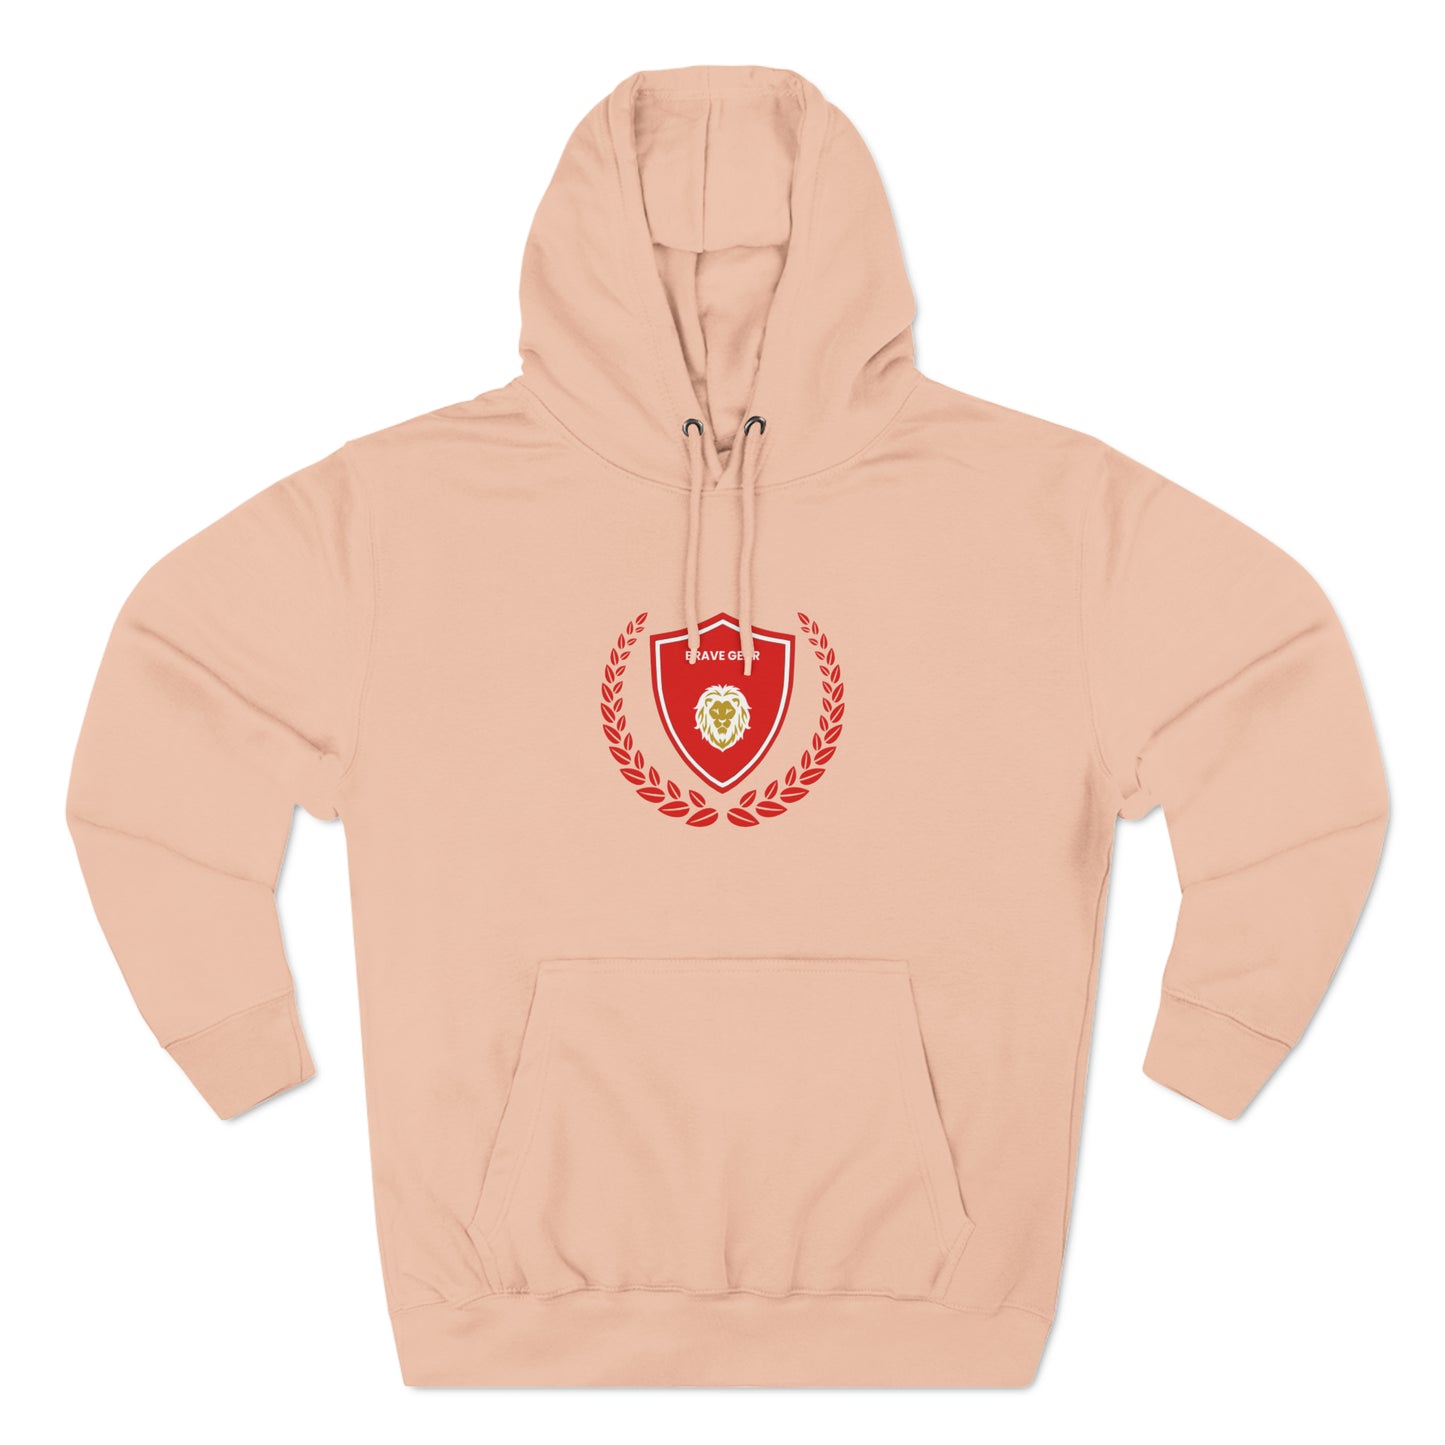 BG "Football Club logo" Premium Pullover Hoodie